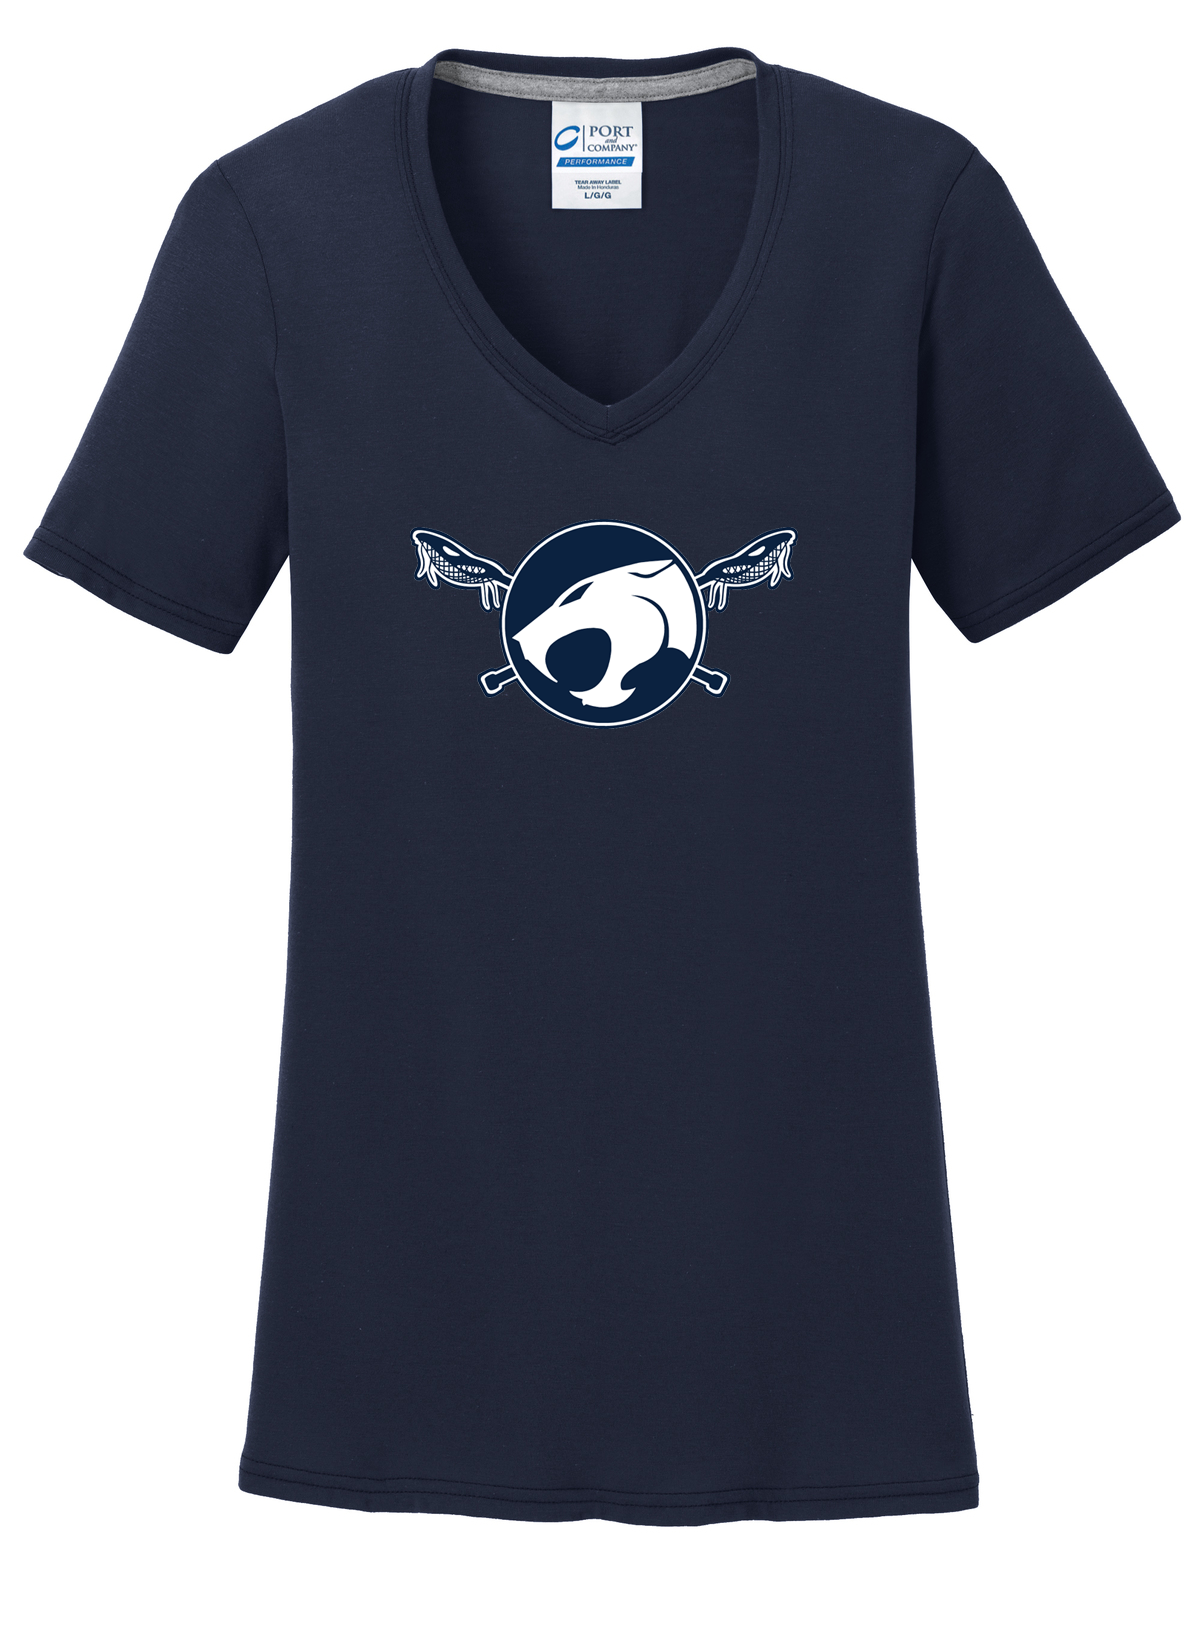 Reitz Lacrosse Women's Navy Blue T-Shirt